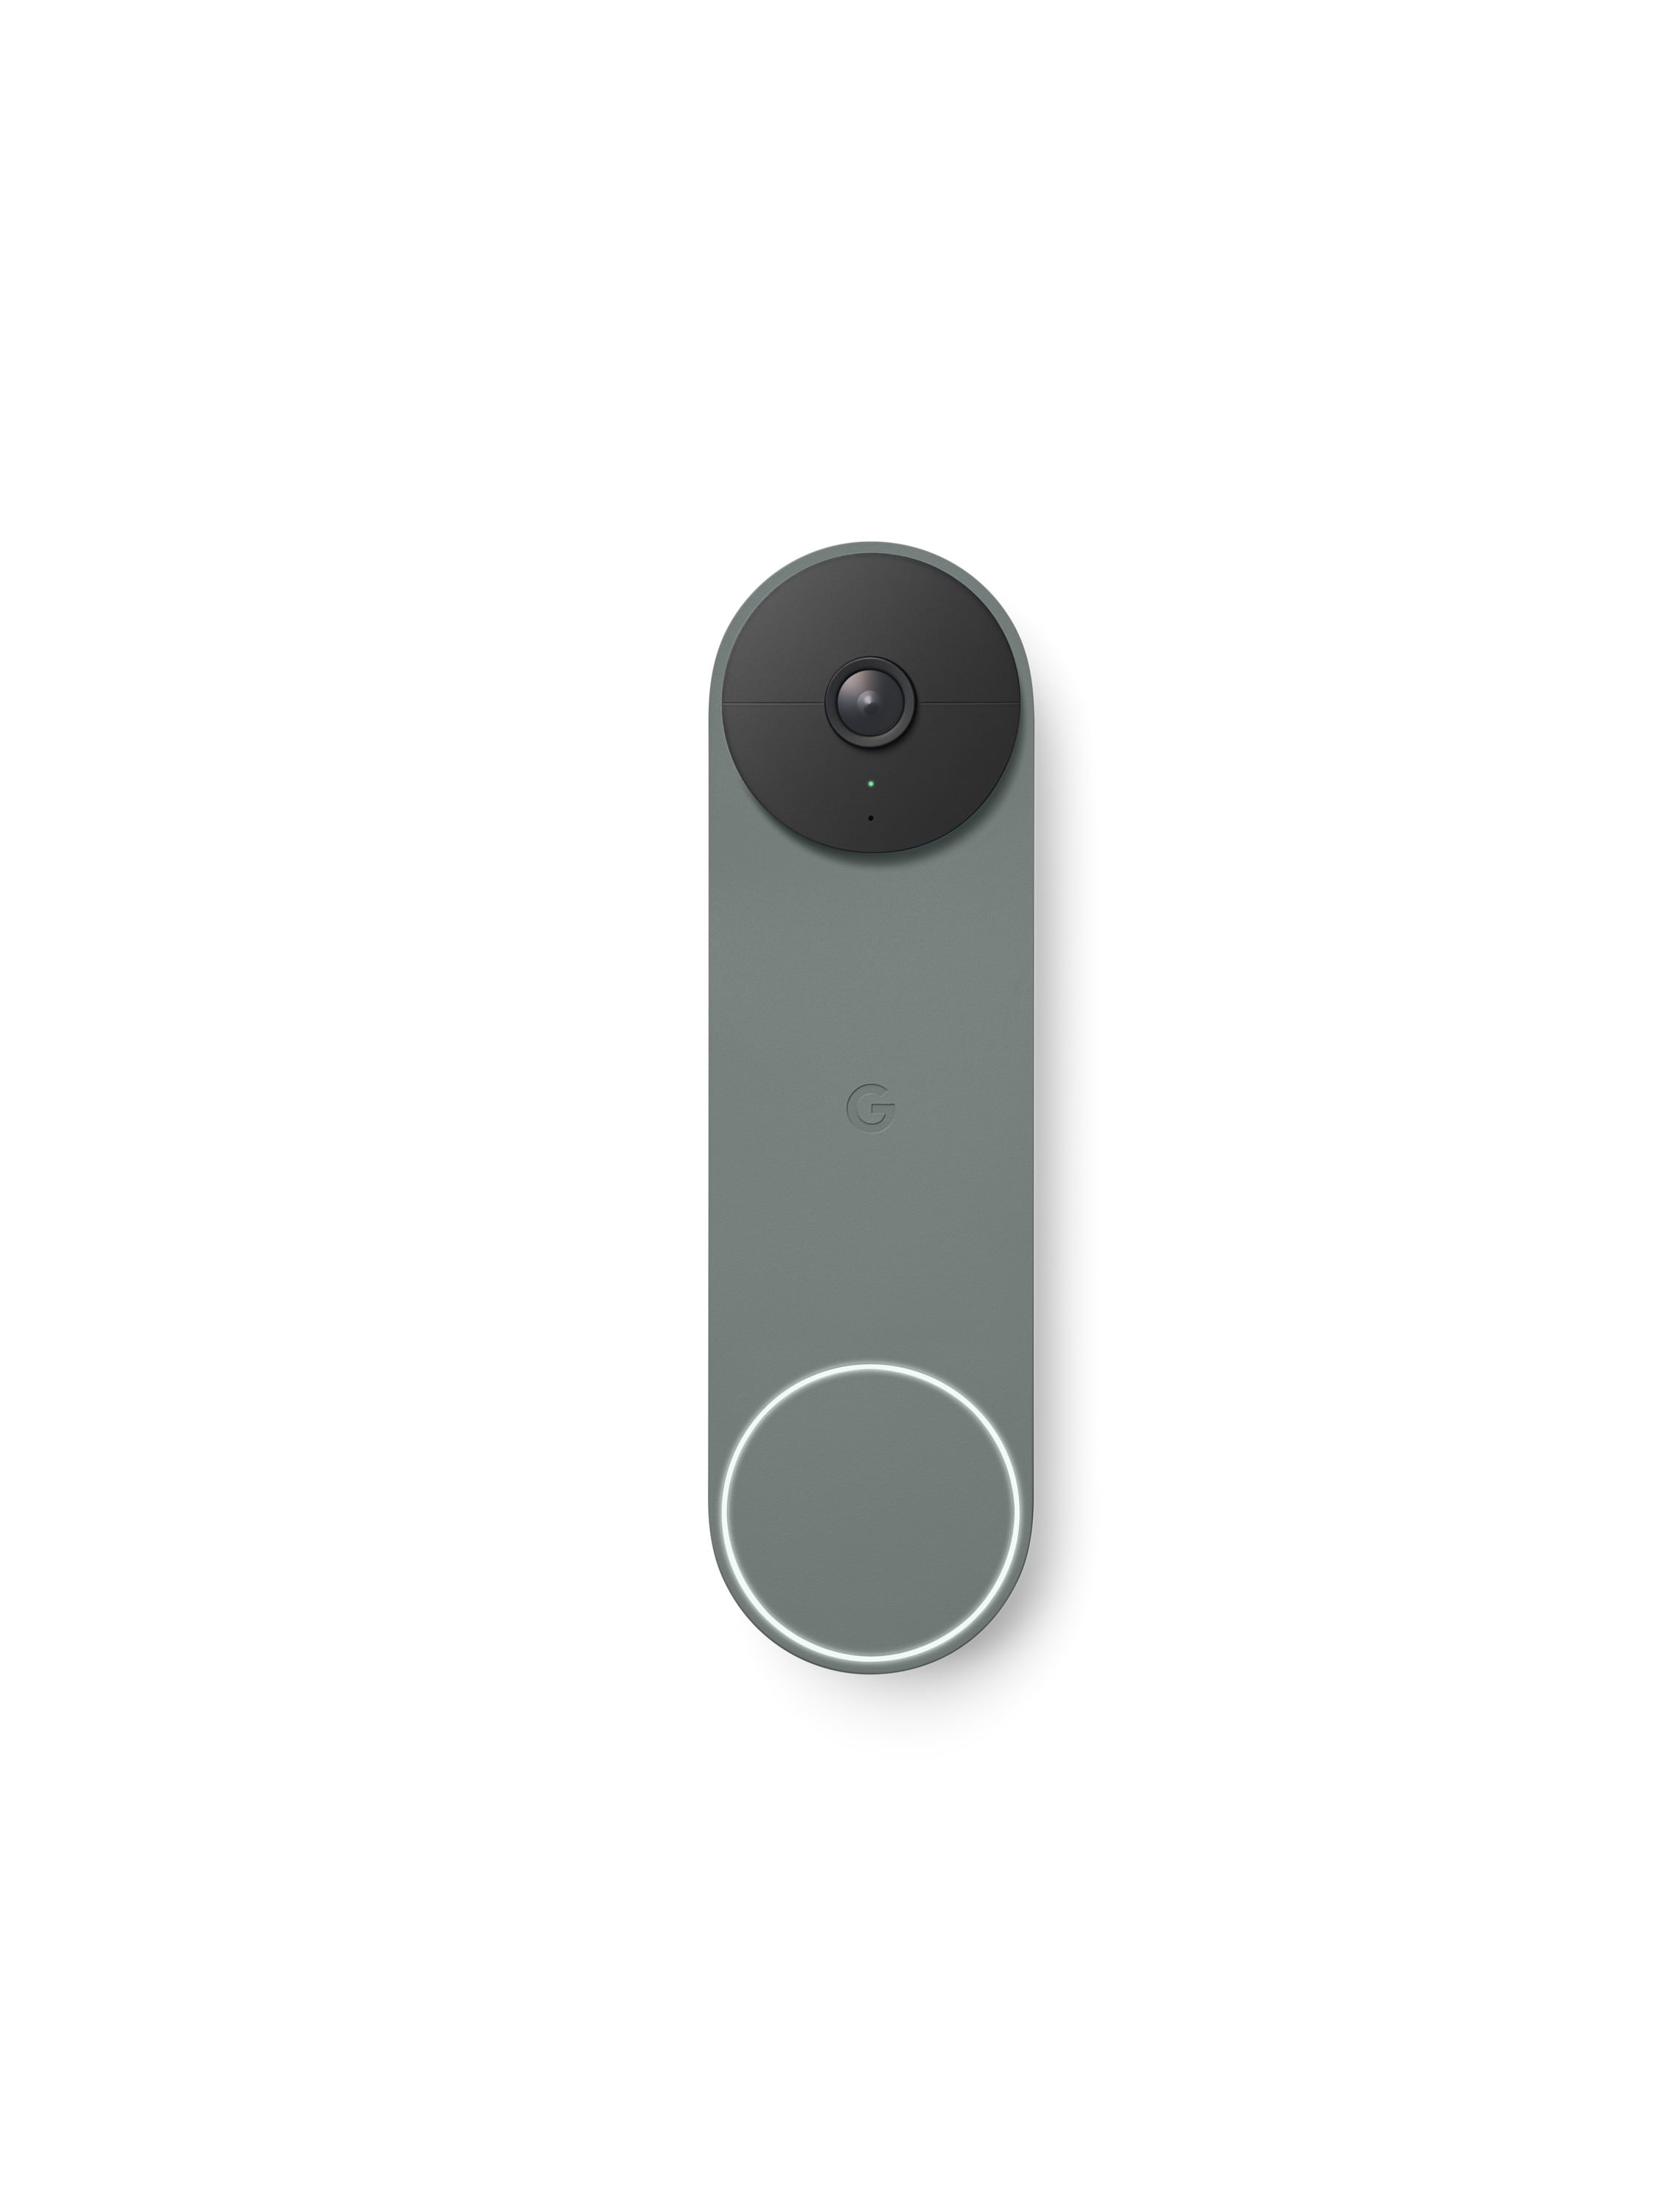 Google Nest Doorbell (Battery) - Video Doorbell Camera - Wireless 